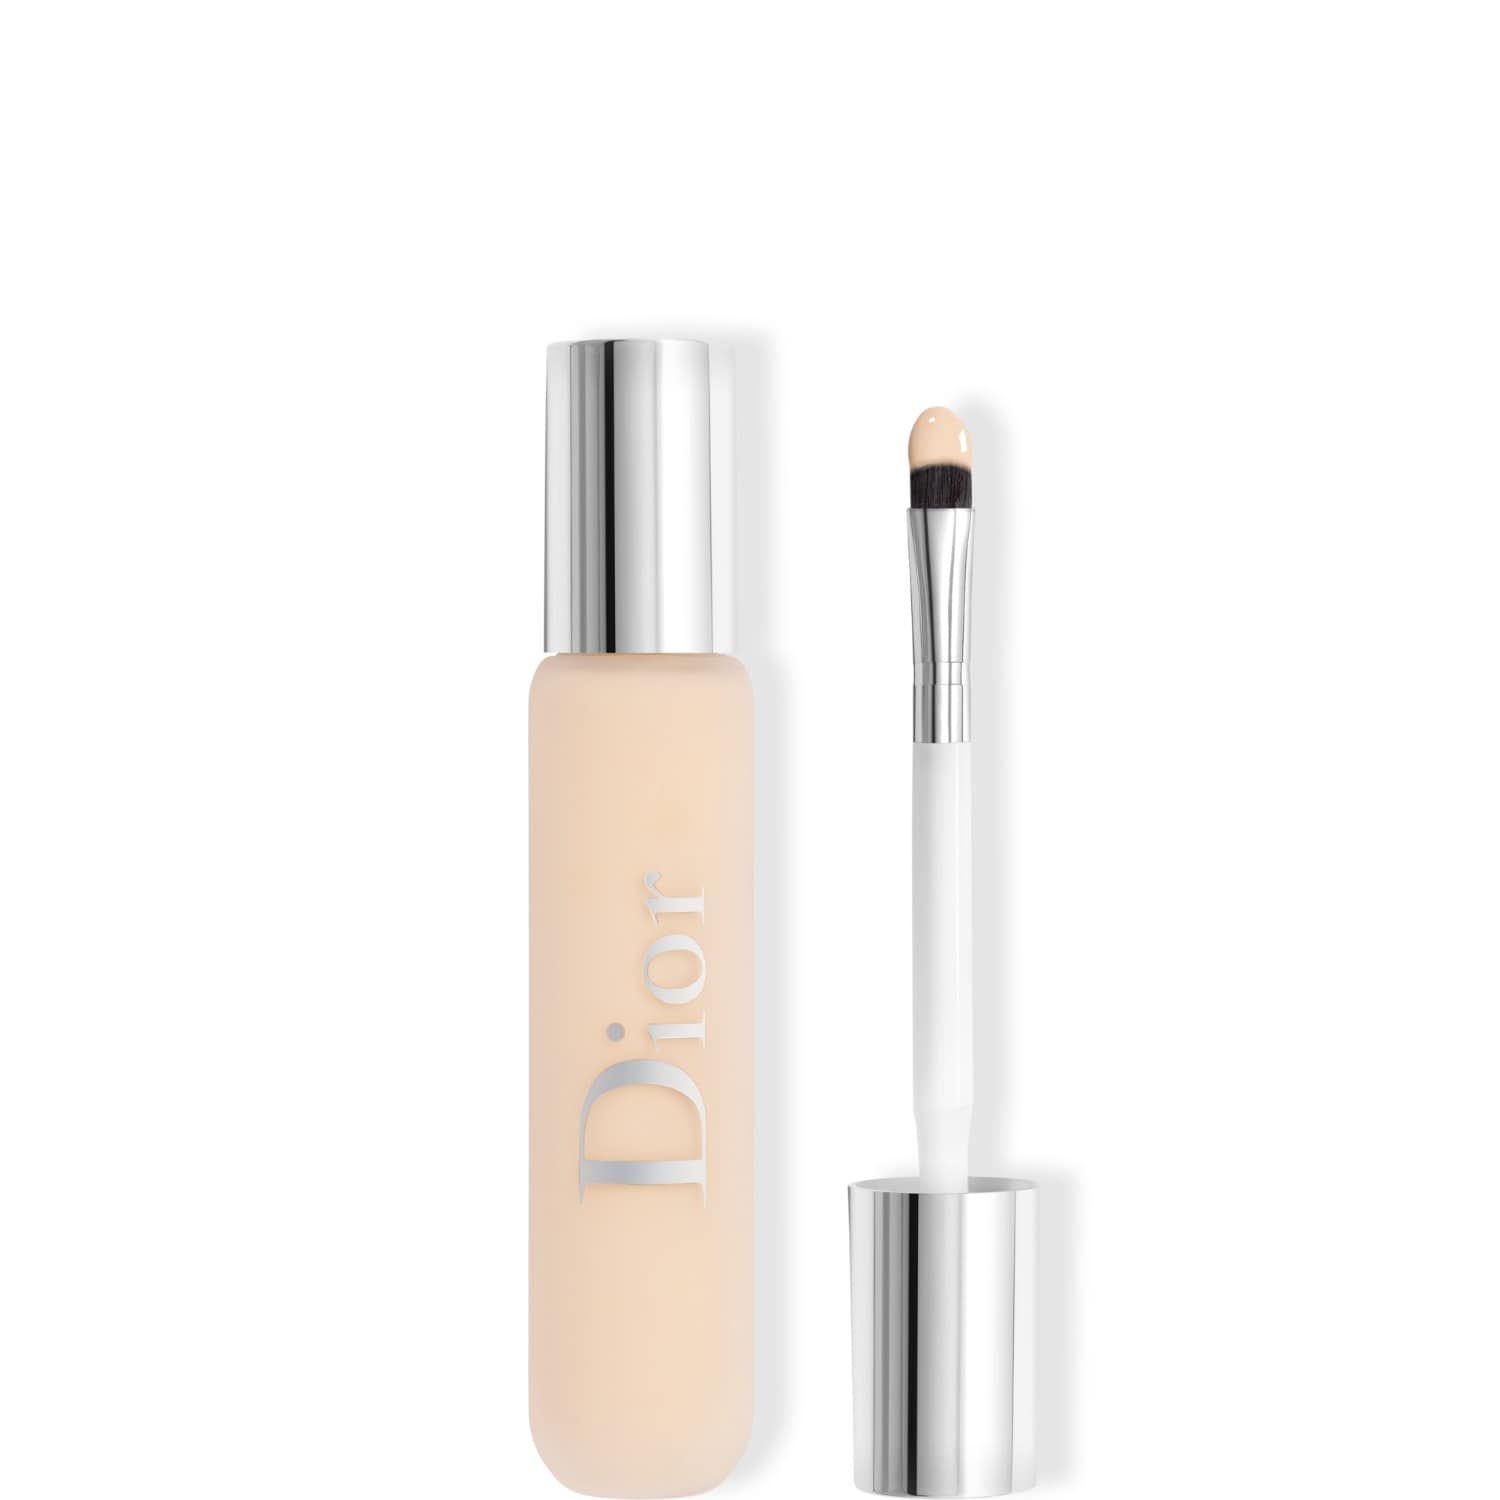 Dior Backstage Dior Backstage Face & Body Flash Perfector Concealer, No. 1n - Neutral